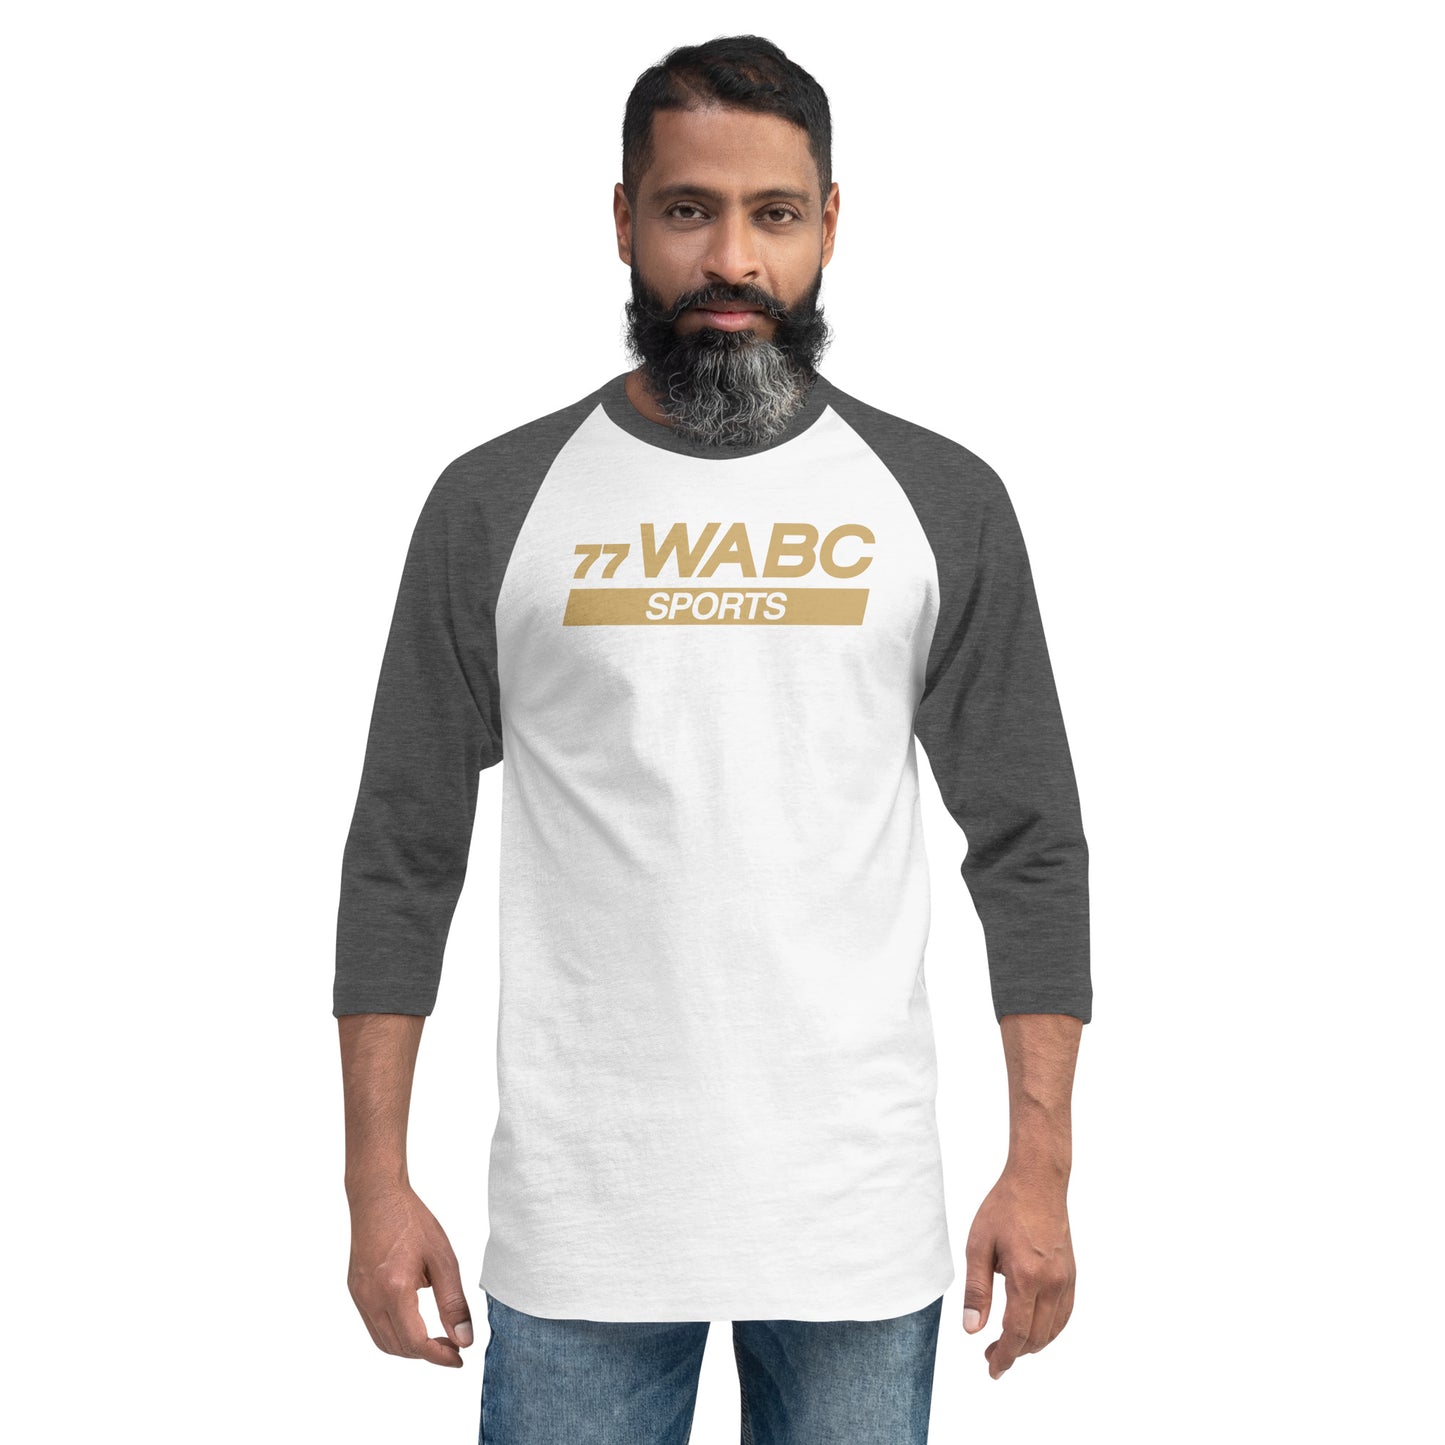 77WABC Sports 3/4 sleeve raglan shirt